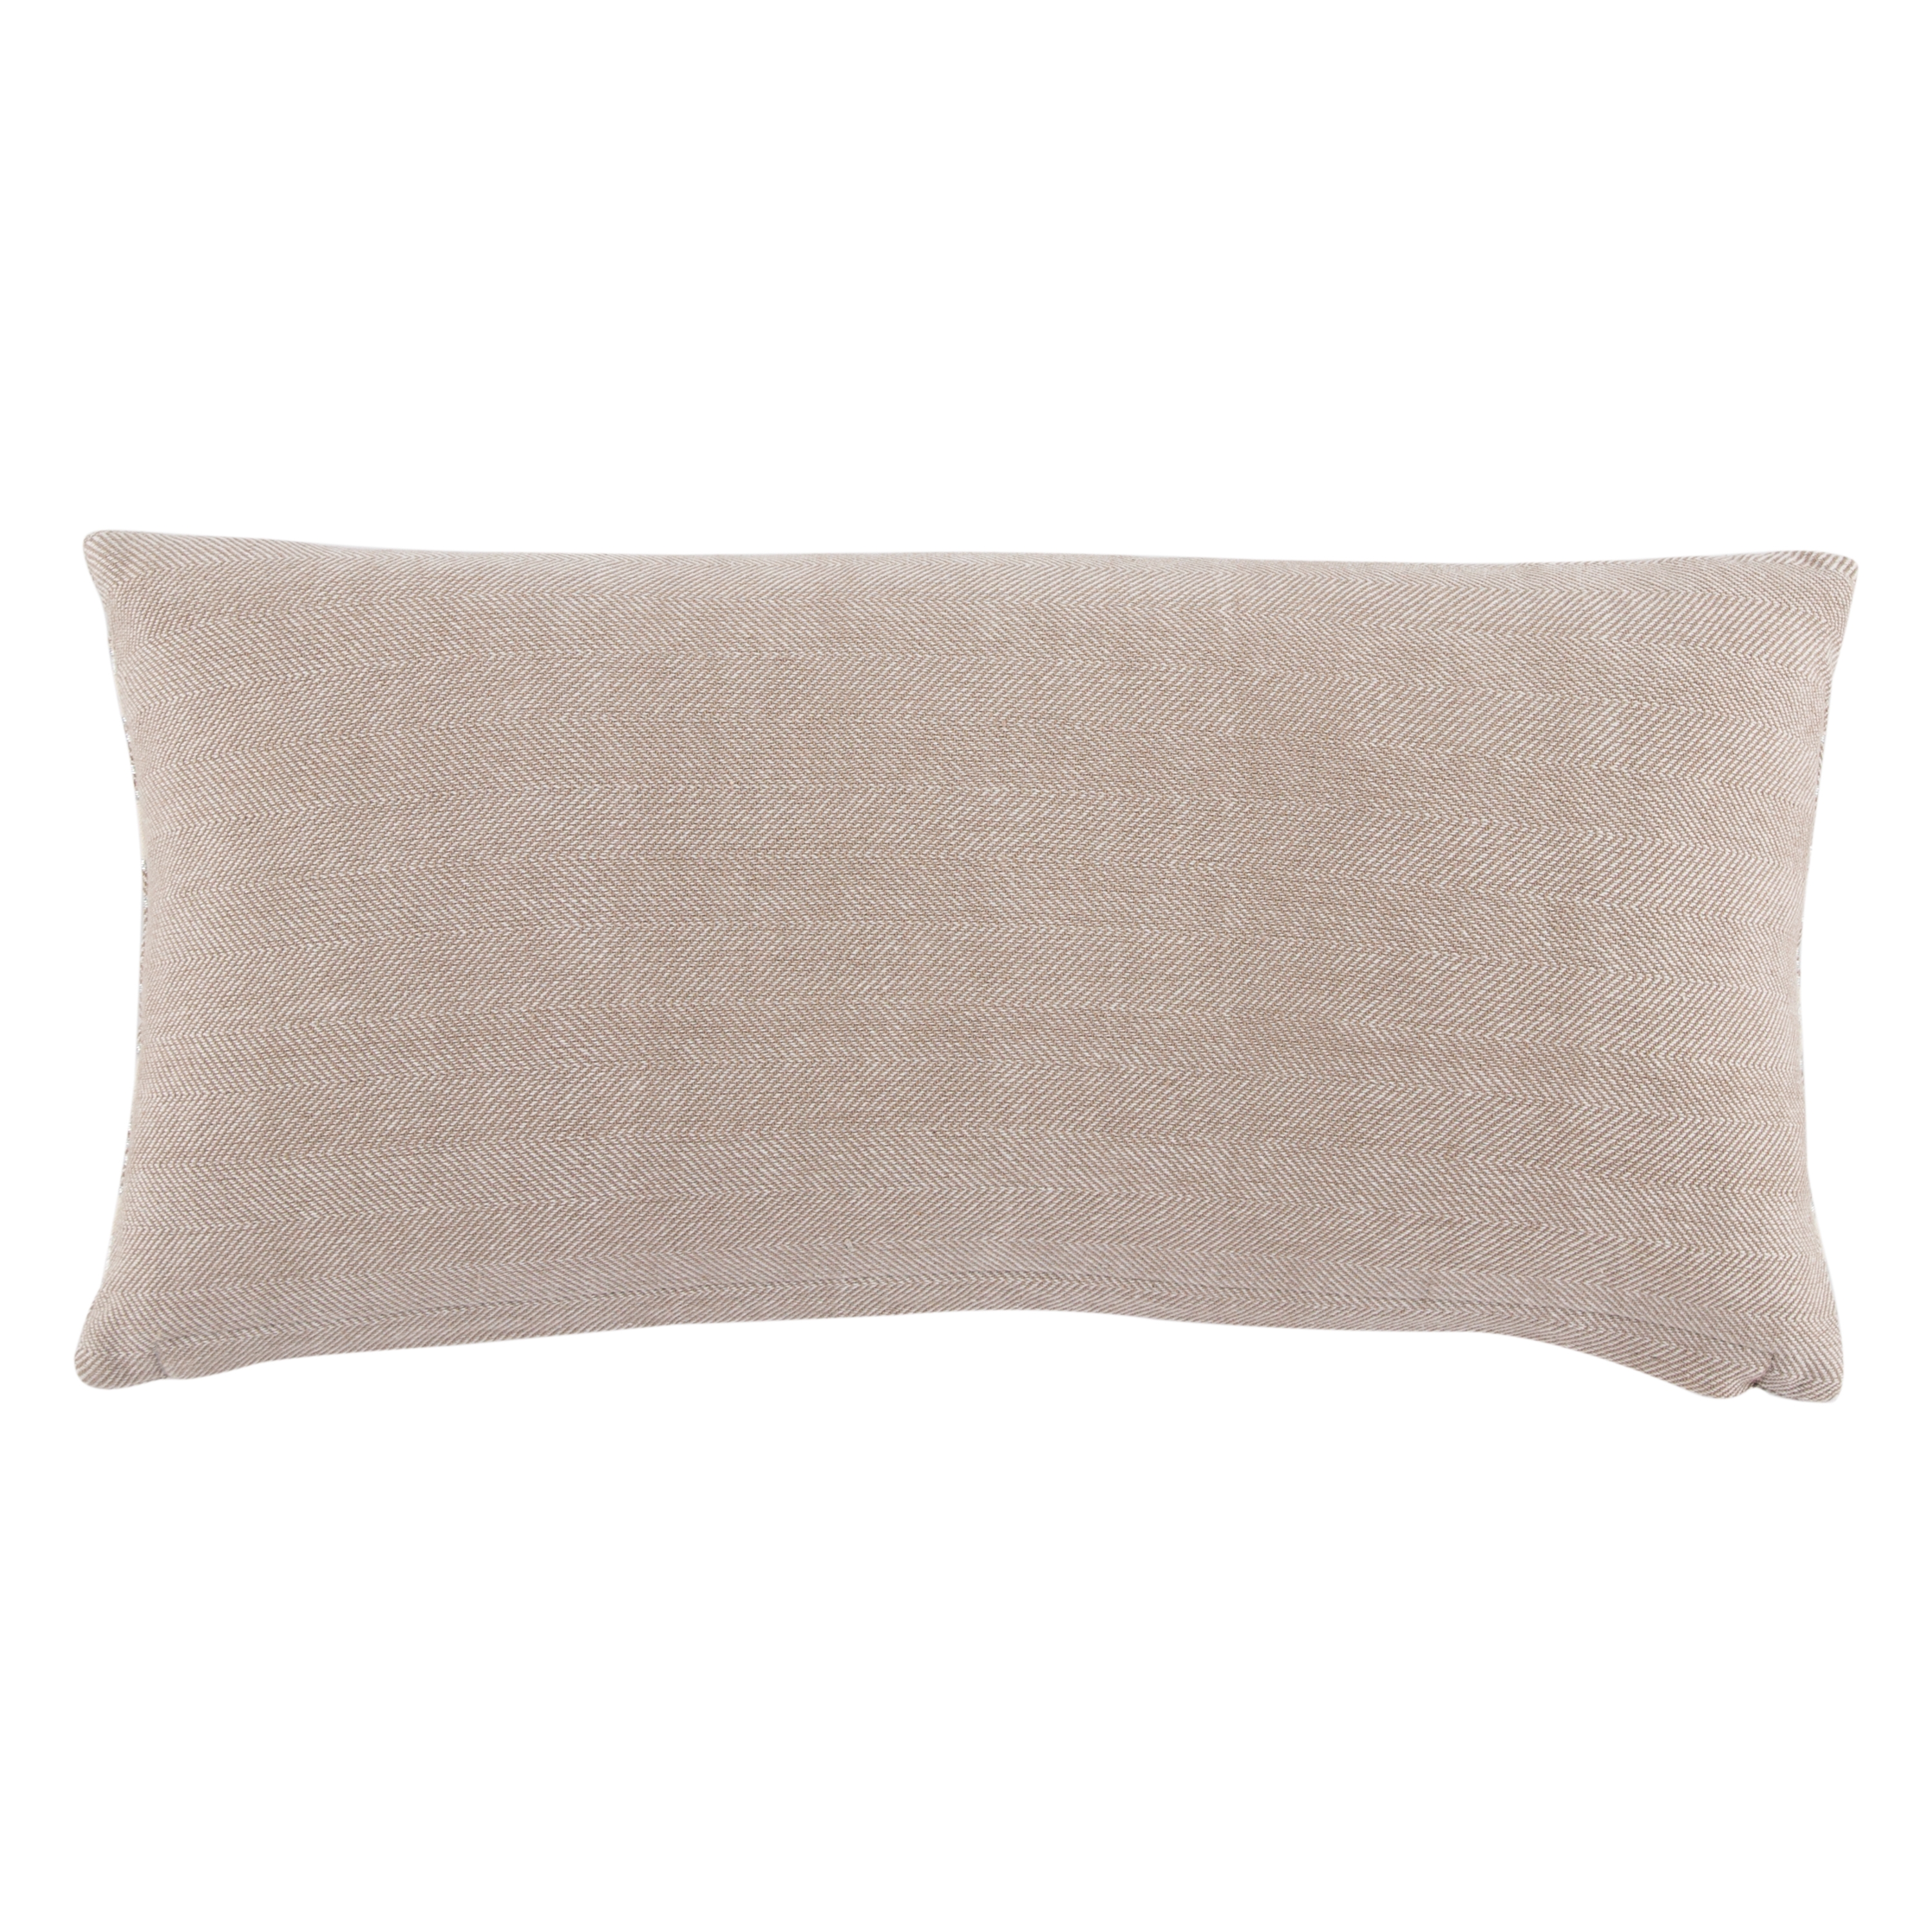 Design (US) Taupe 10"X21" Pillow - Image 1